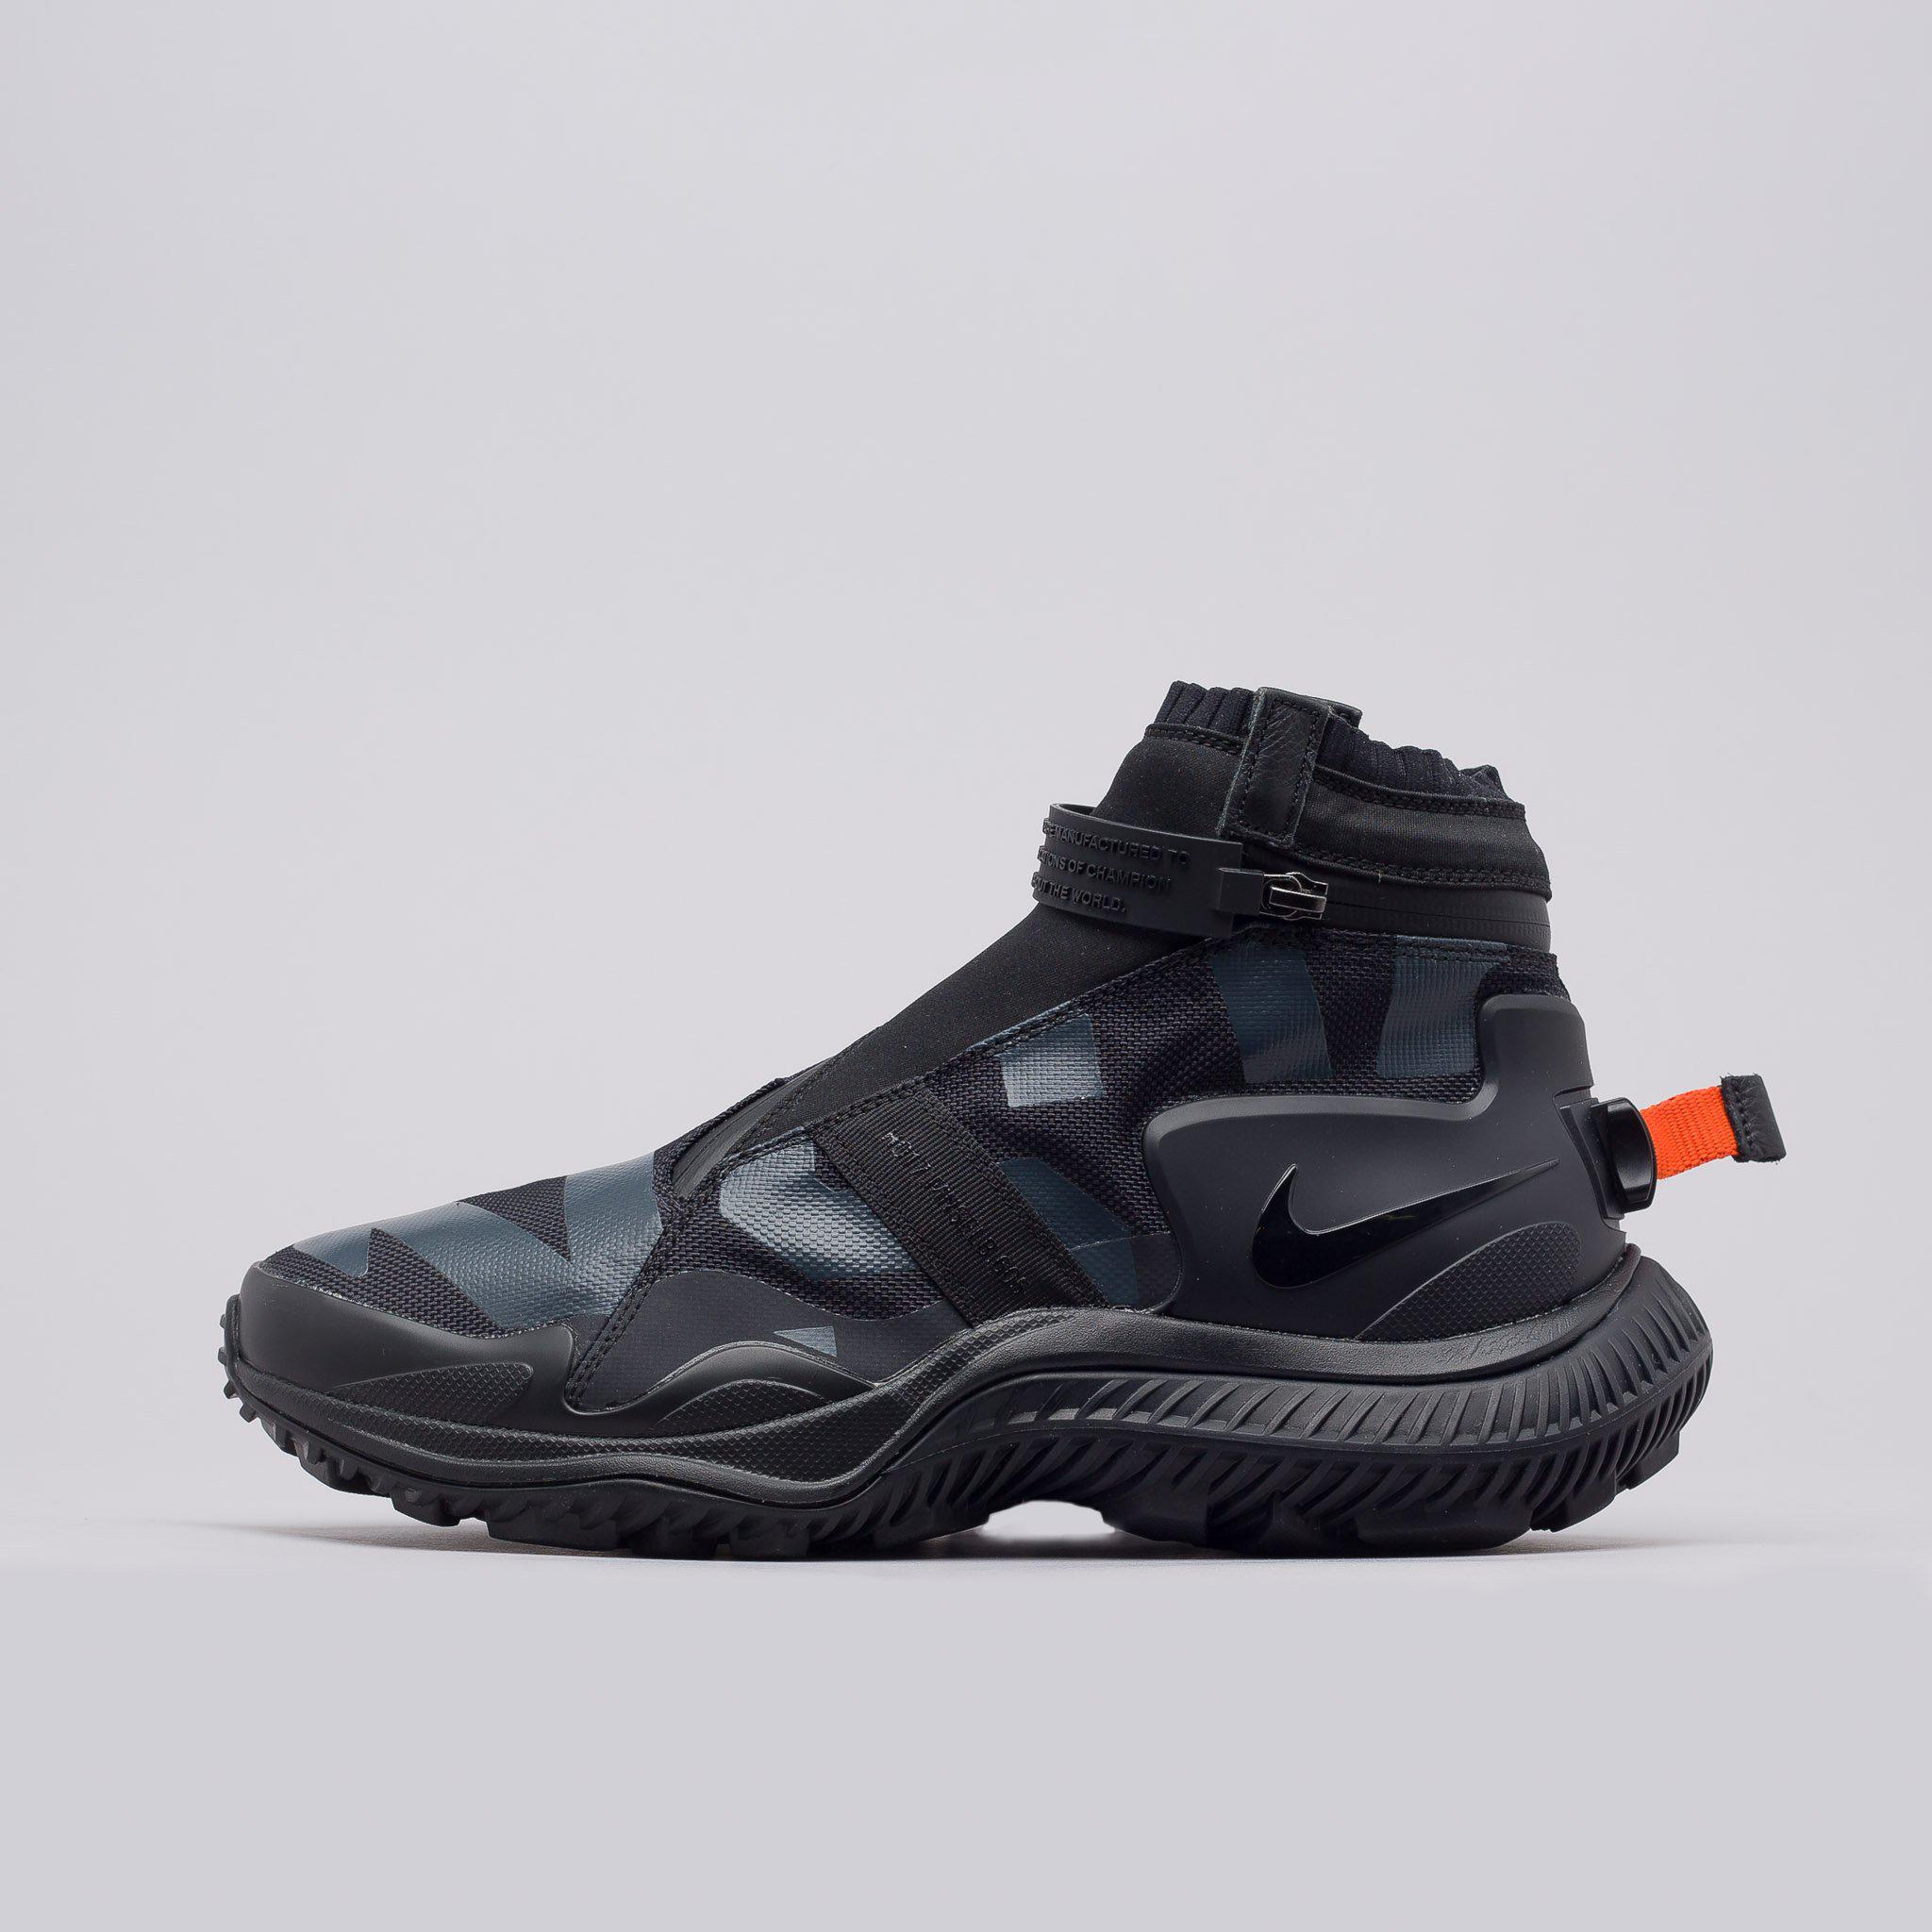 Nike Rubber Acg Gaiter Boot In Black 